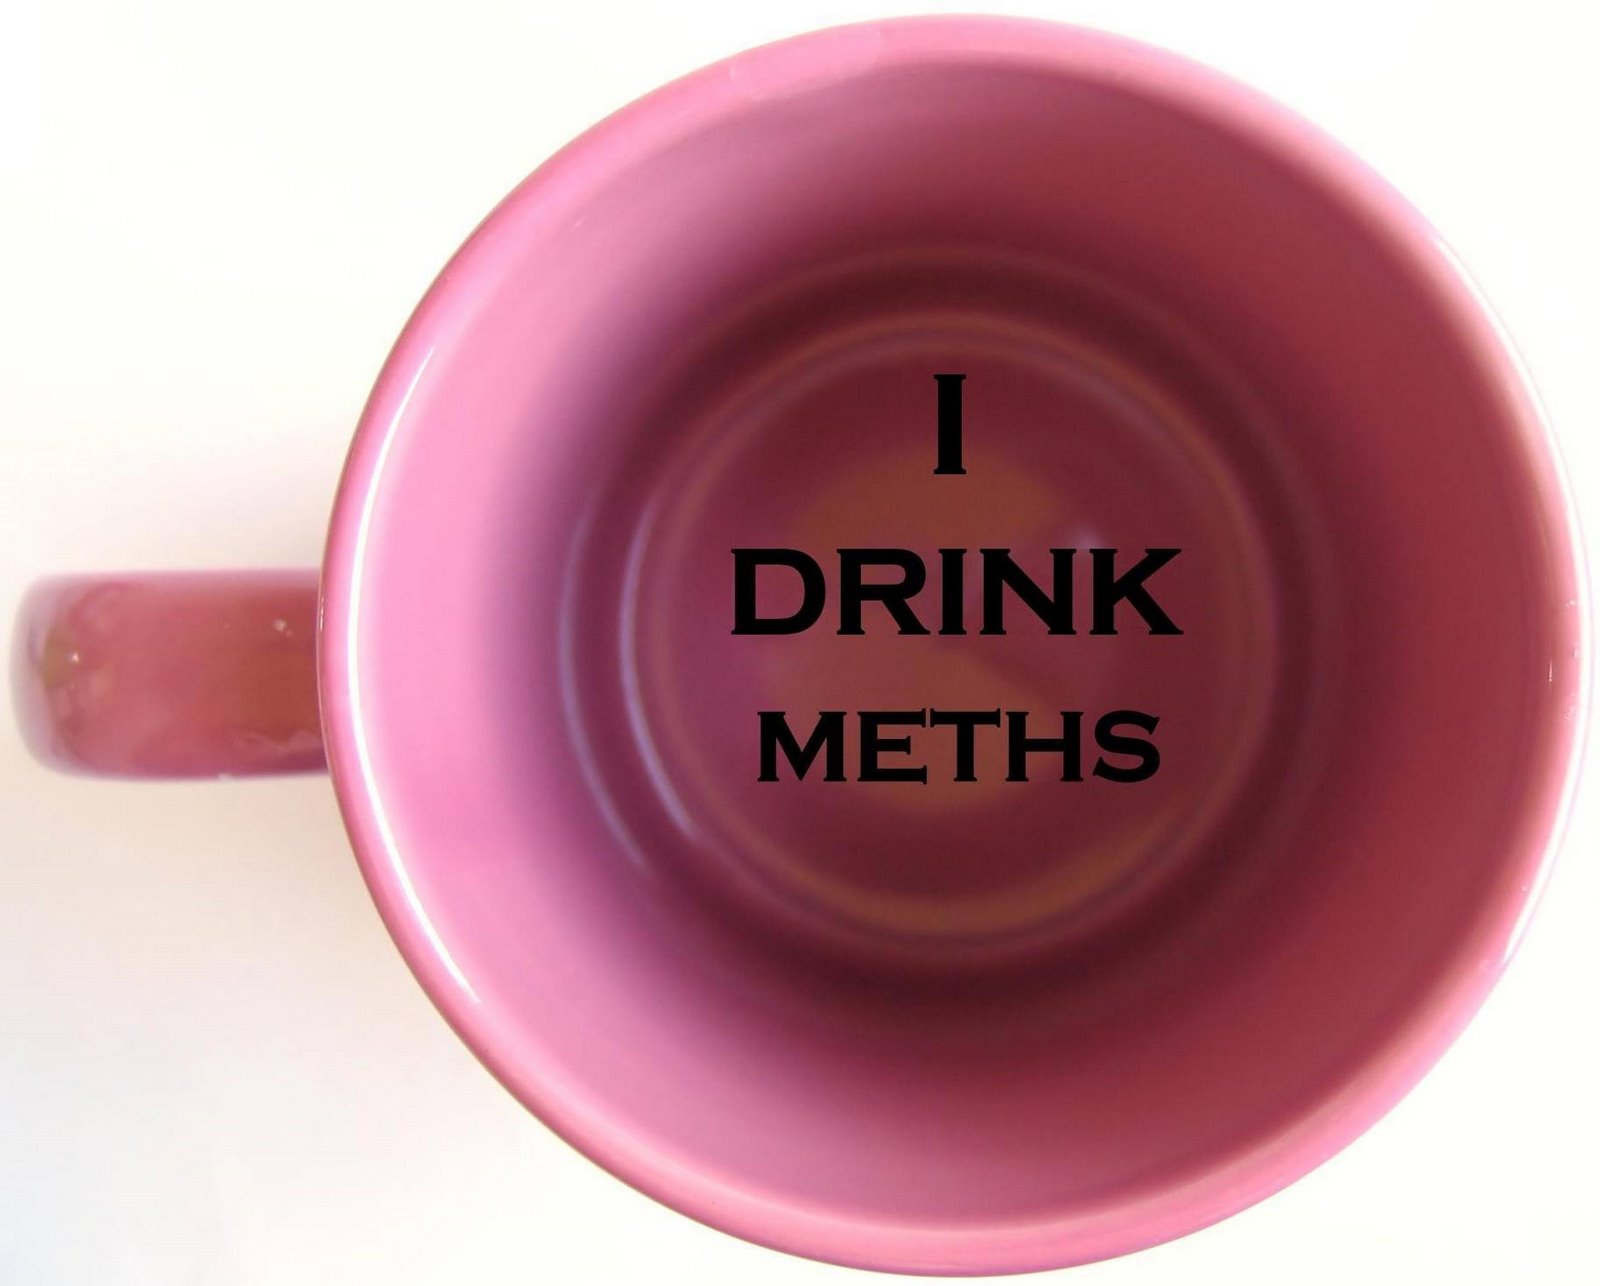 I DRINK METHS